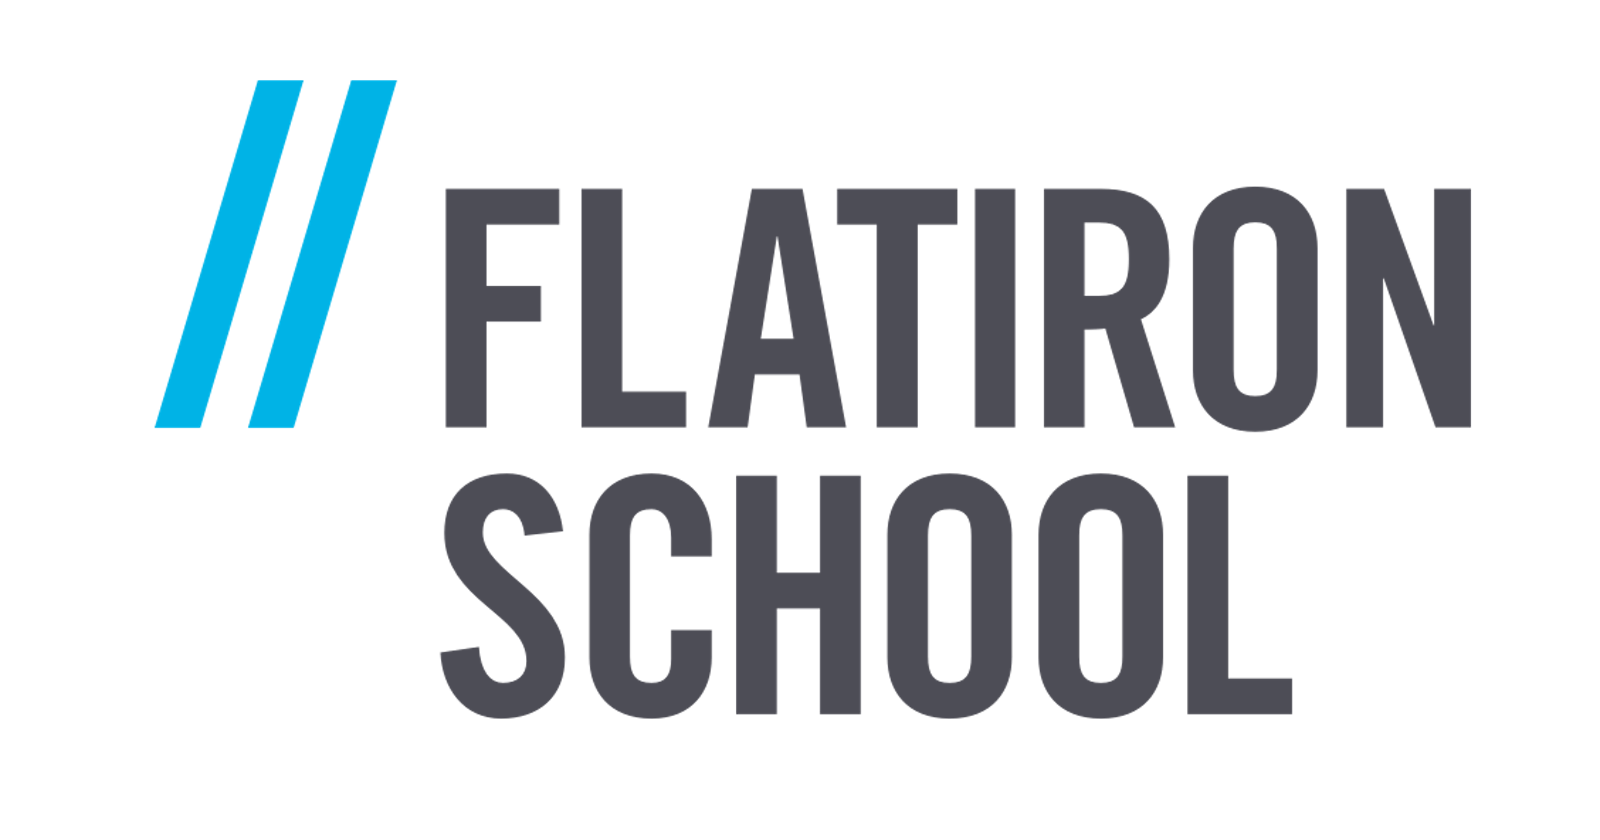 Flatiron Bootcamp - Phase 1